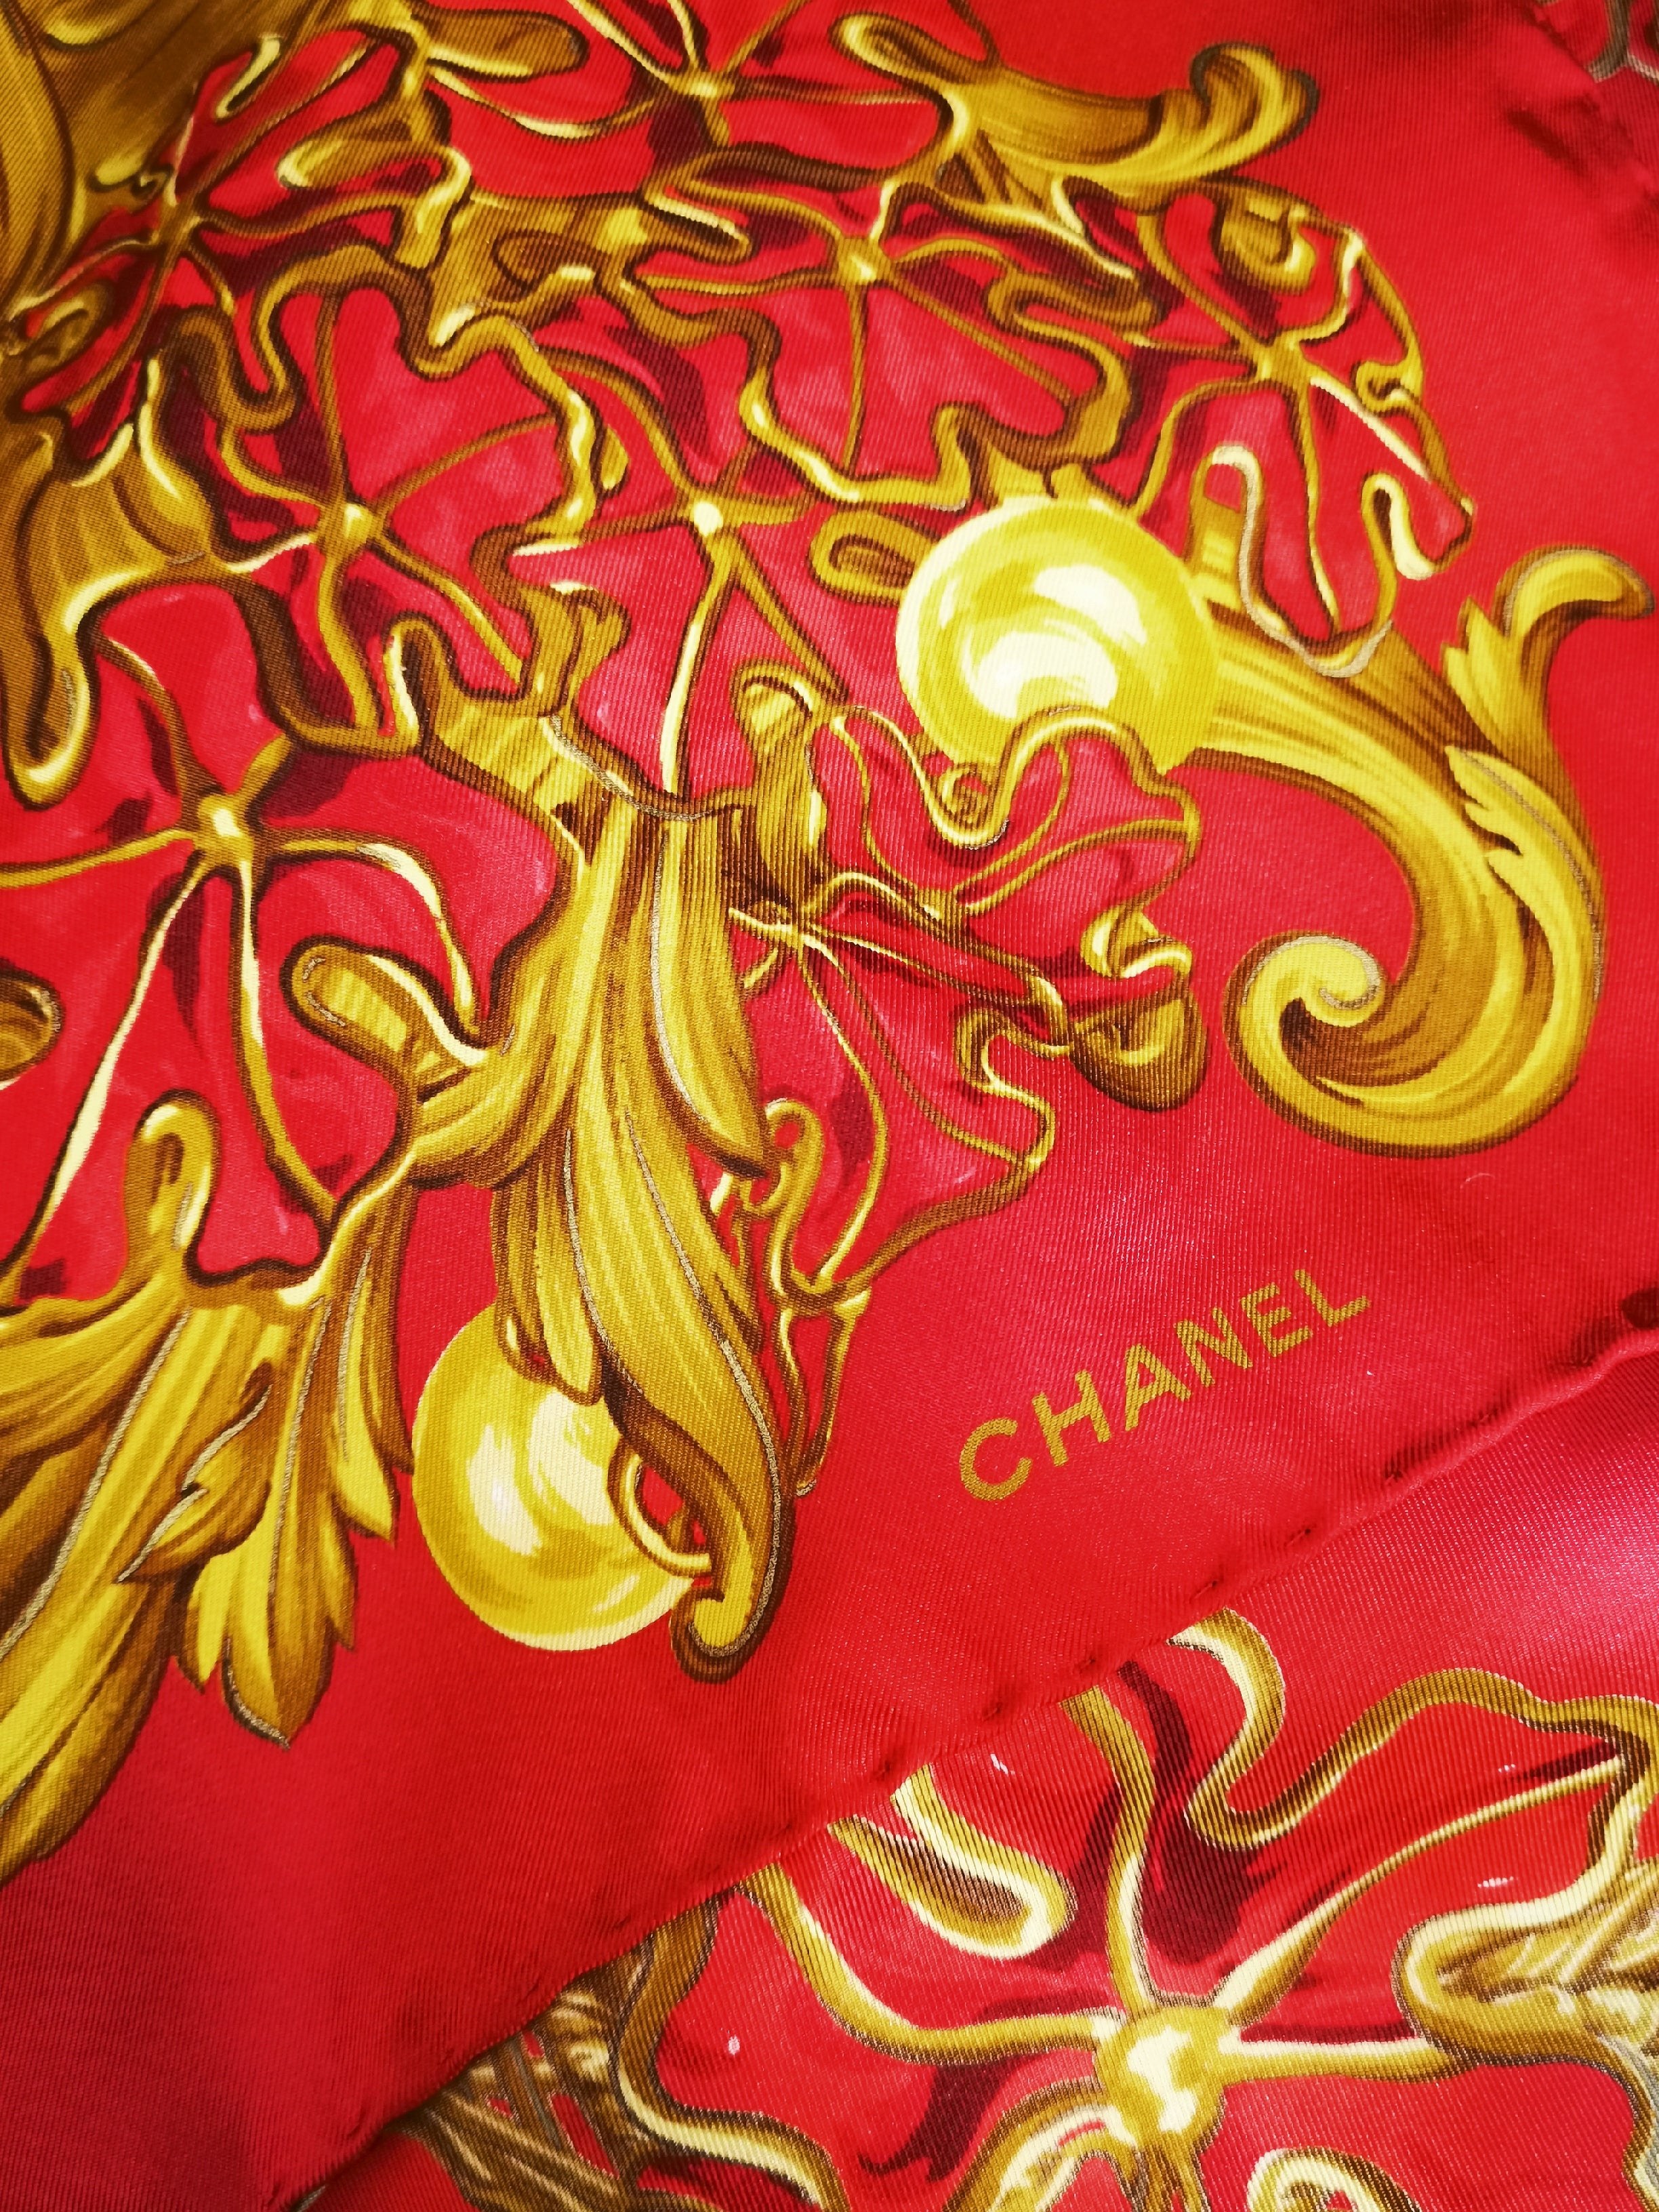 Designer Scarf Collection Part 2- Chanel Scarves 